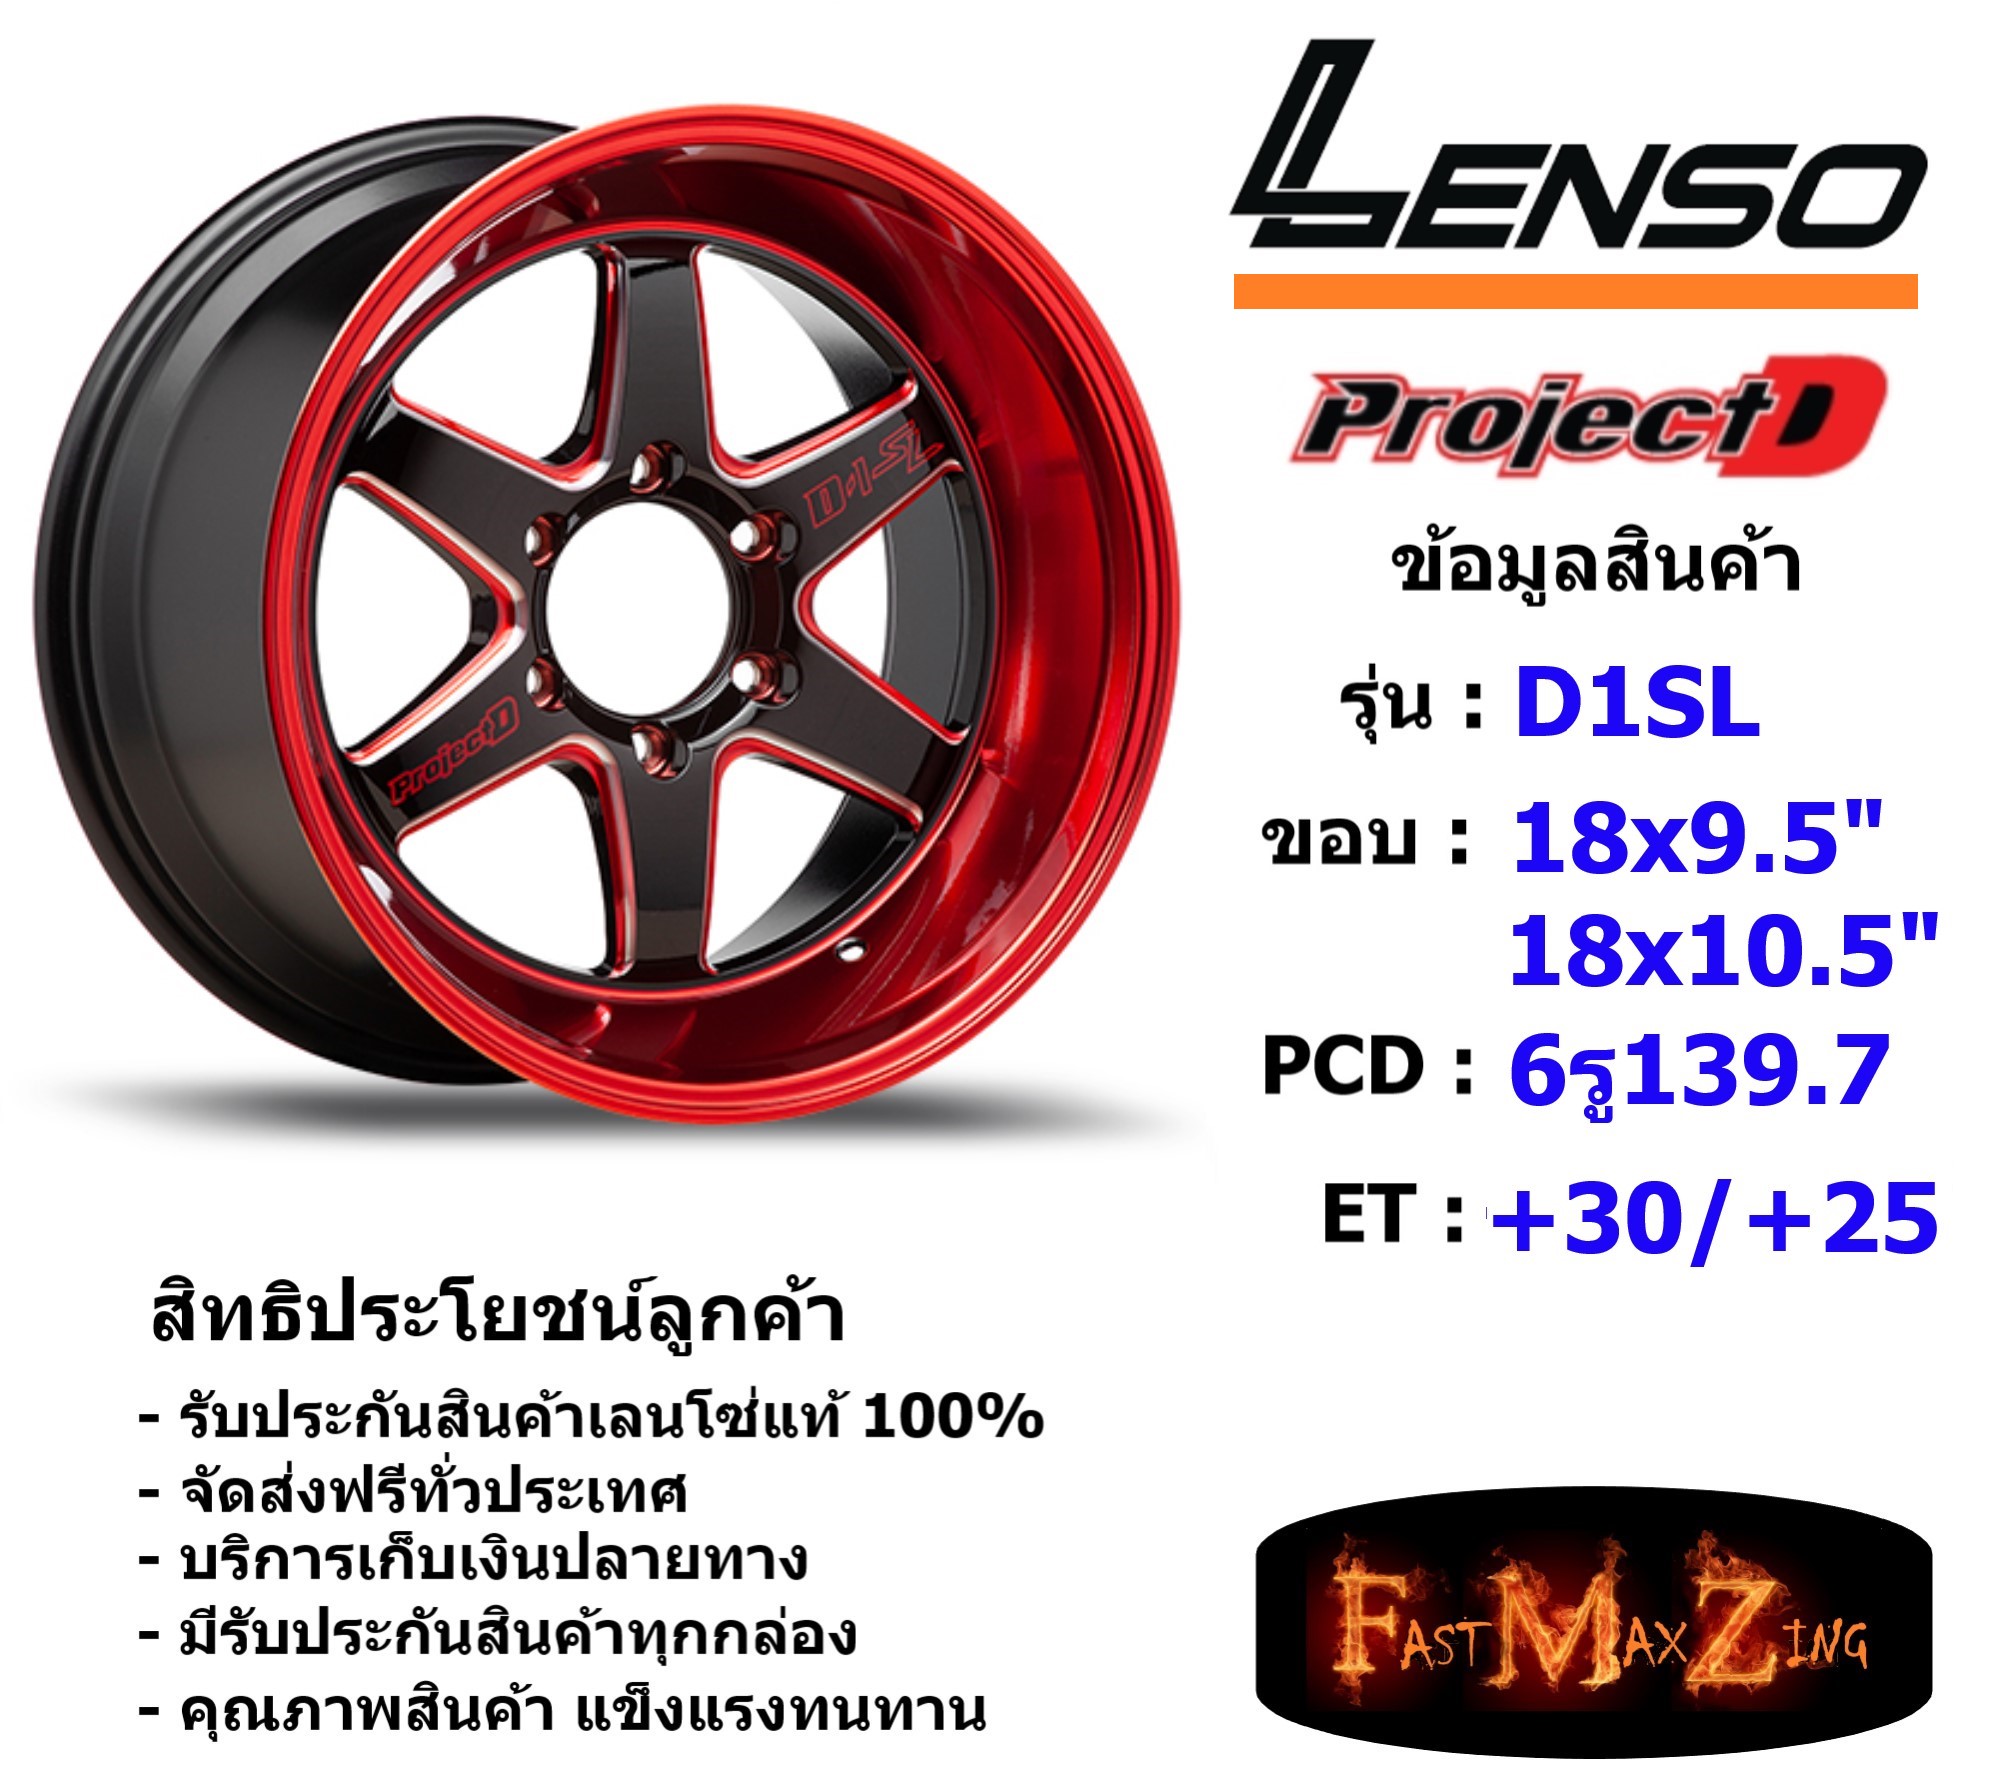 Lenso Wheel ProjectD D1SL ขอบ 18x9.5/10.5 6รู139.7 ET+25/+30 สีBRQMW แม็กเลนโซ่ ล้อแม็ก เลนโซ่ lenso18 แม็กรถยนต์ขอบ18